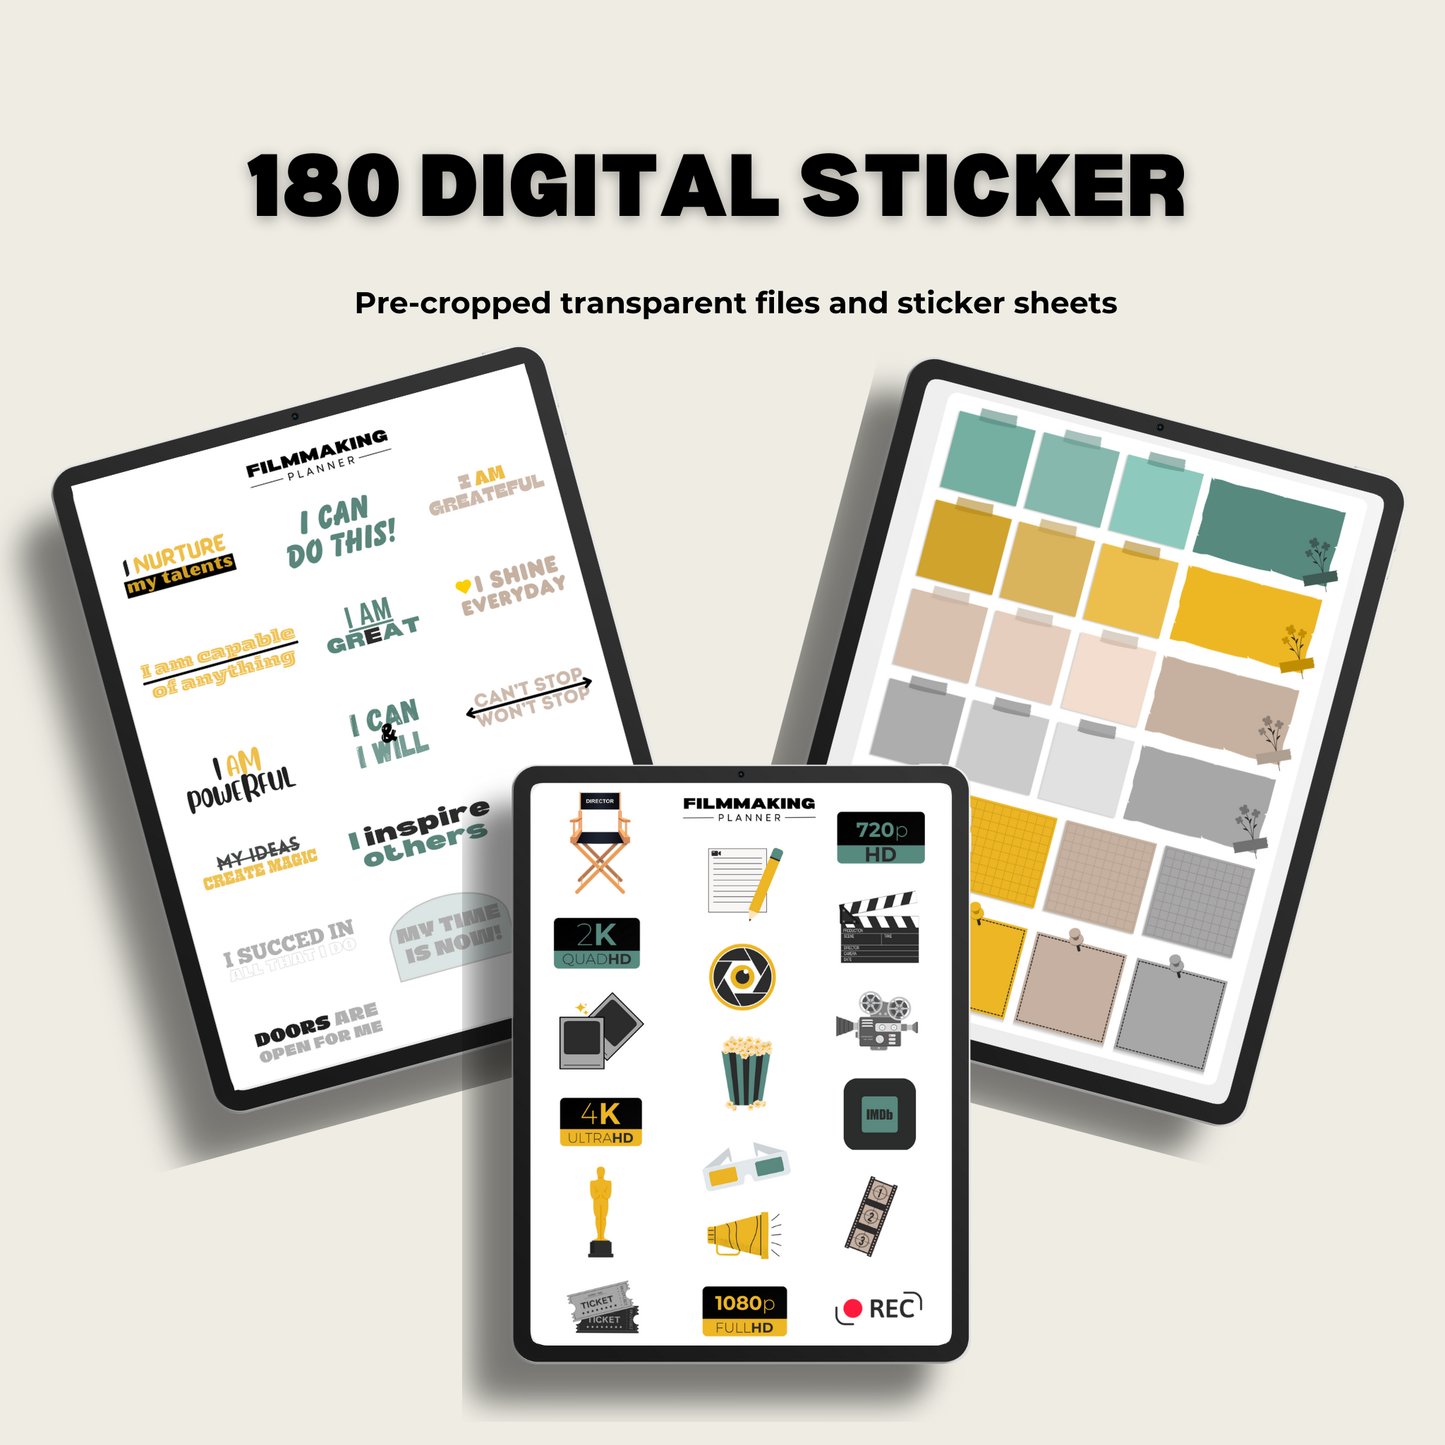 Filmmaking digital sticker product display, general organising stickers, film symbols and affirmation prompts.